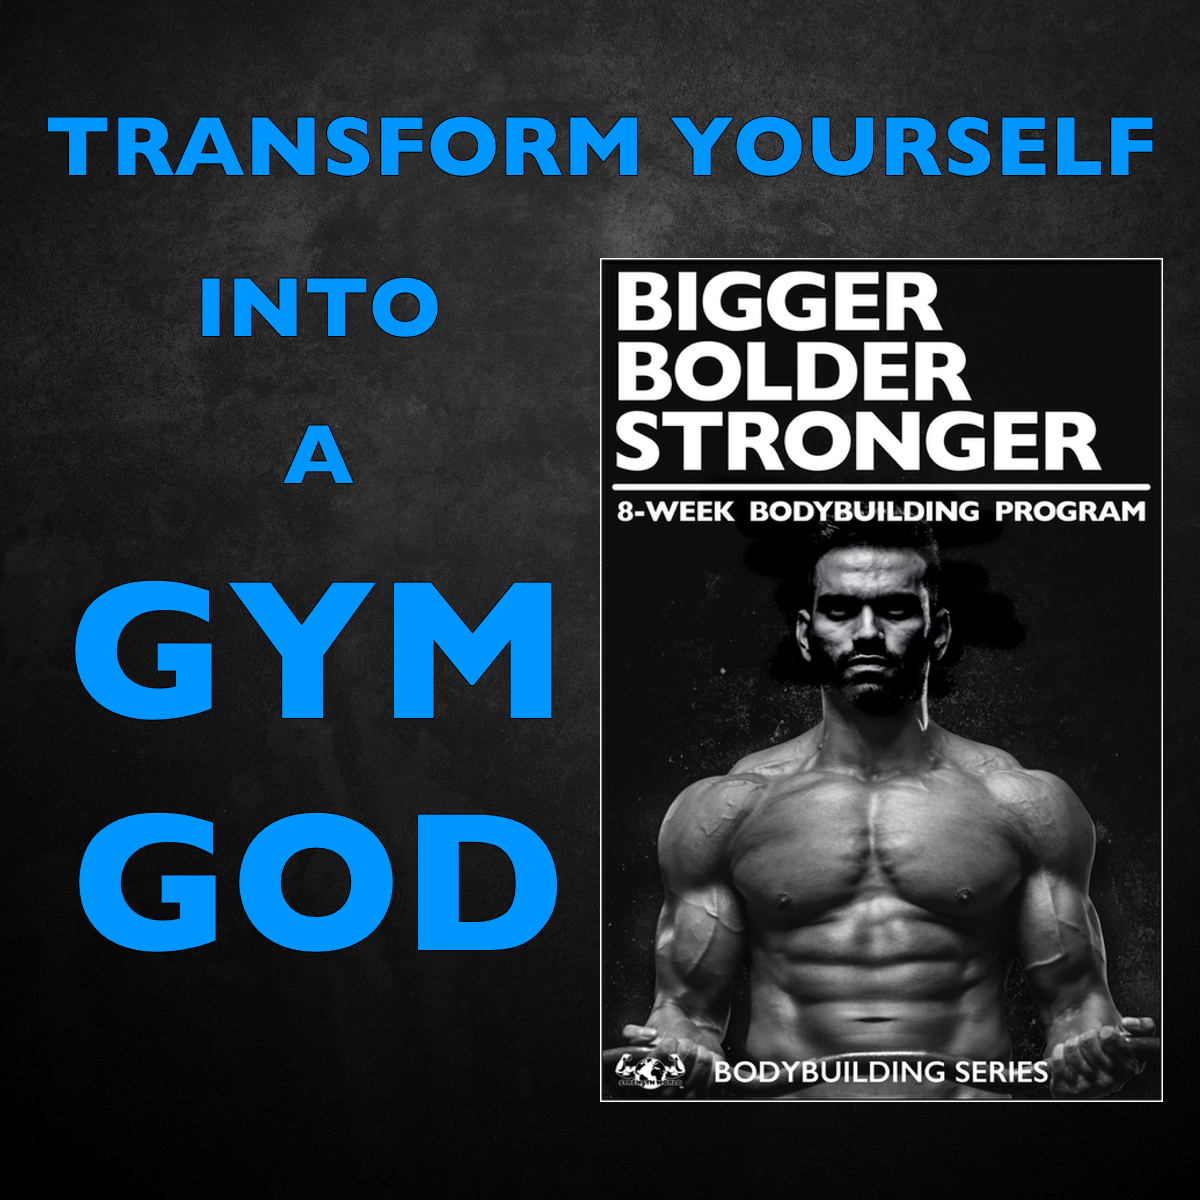 Bigger Bolder Stronger Bodybuilding Program Ad 3